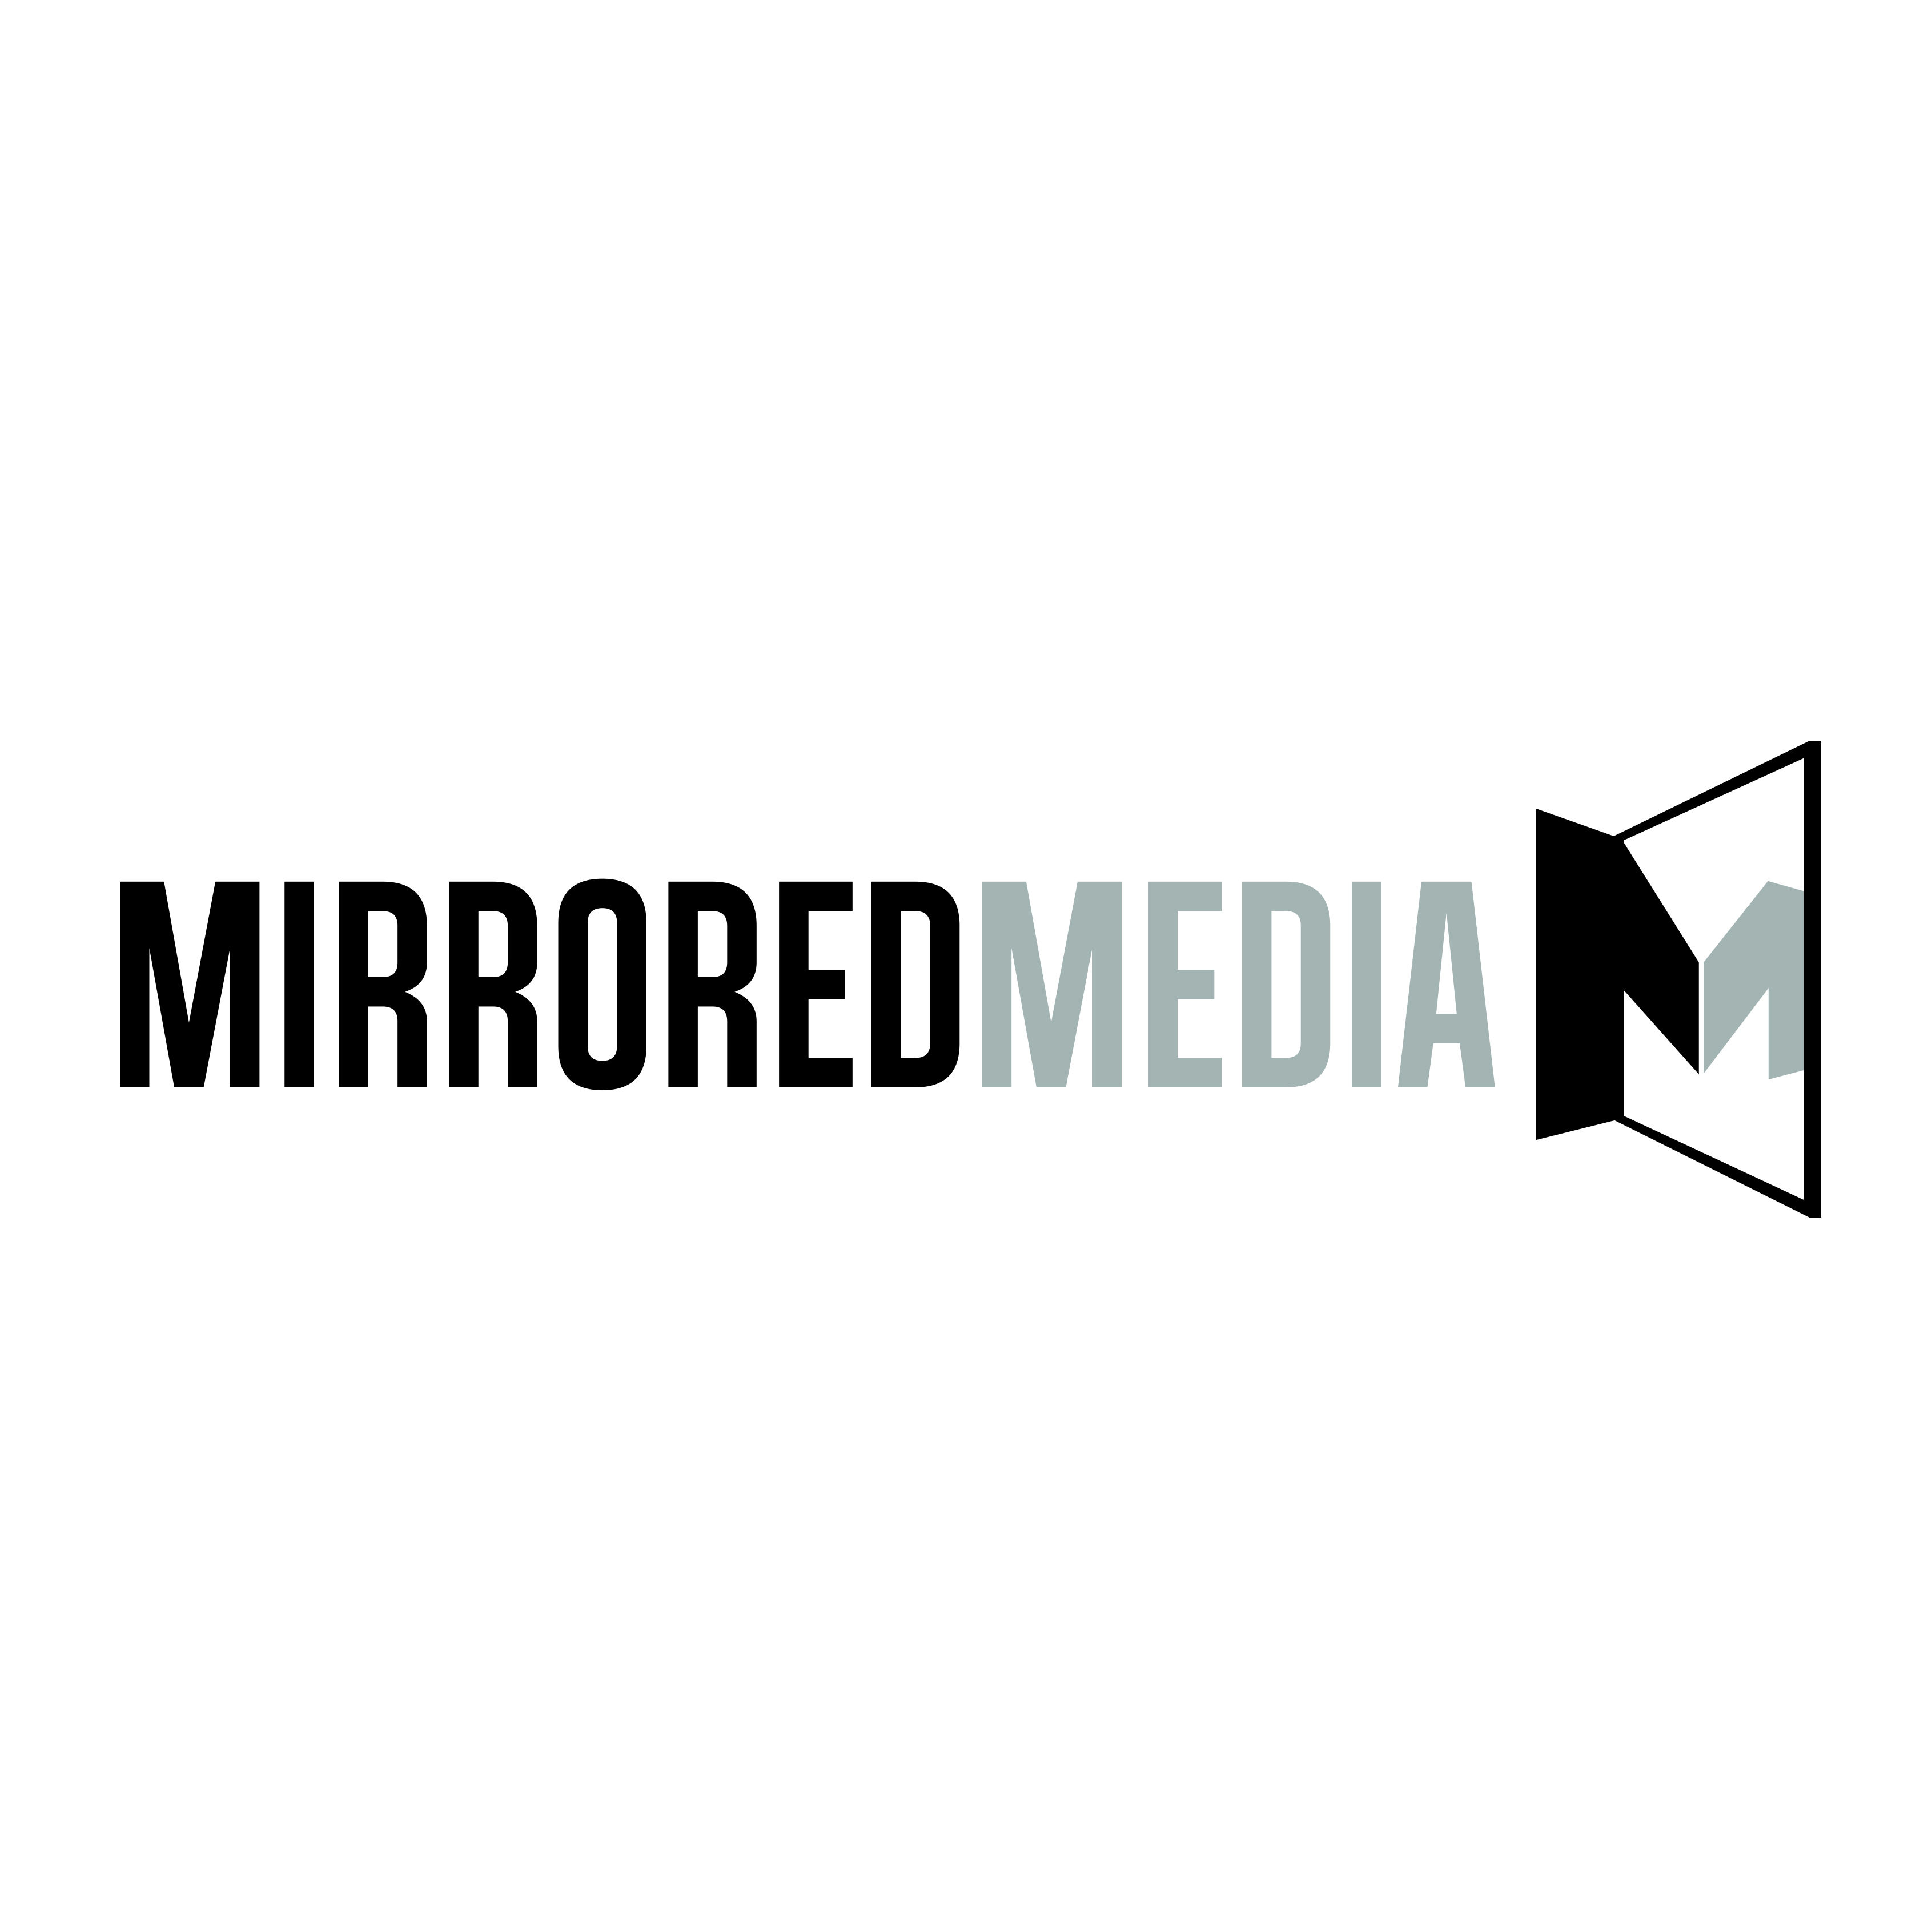 mirrored media